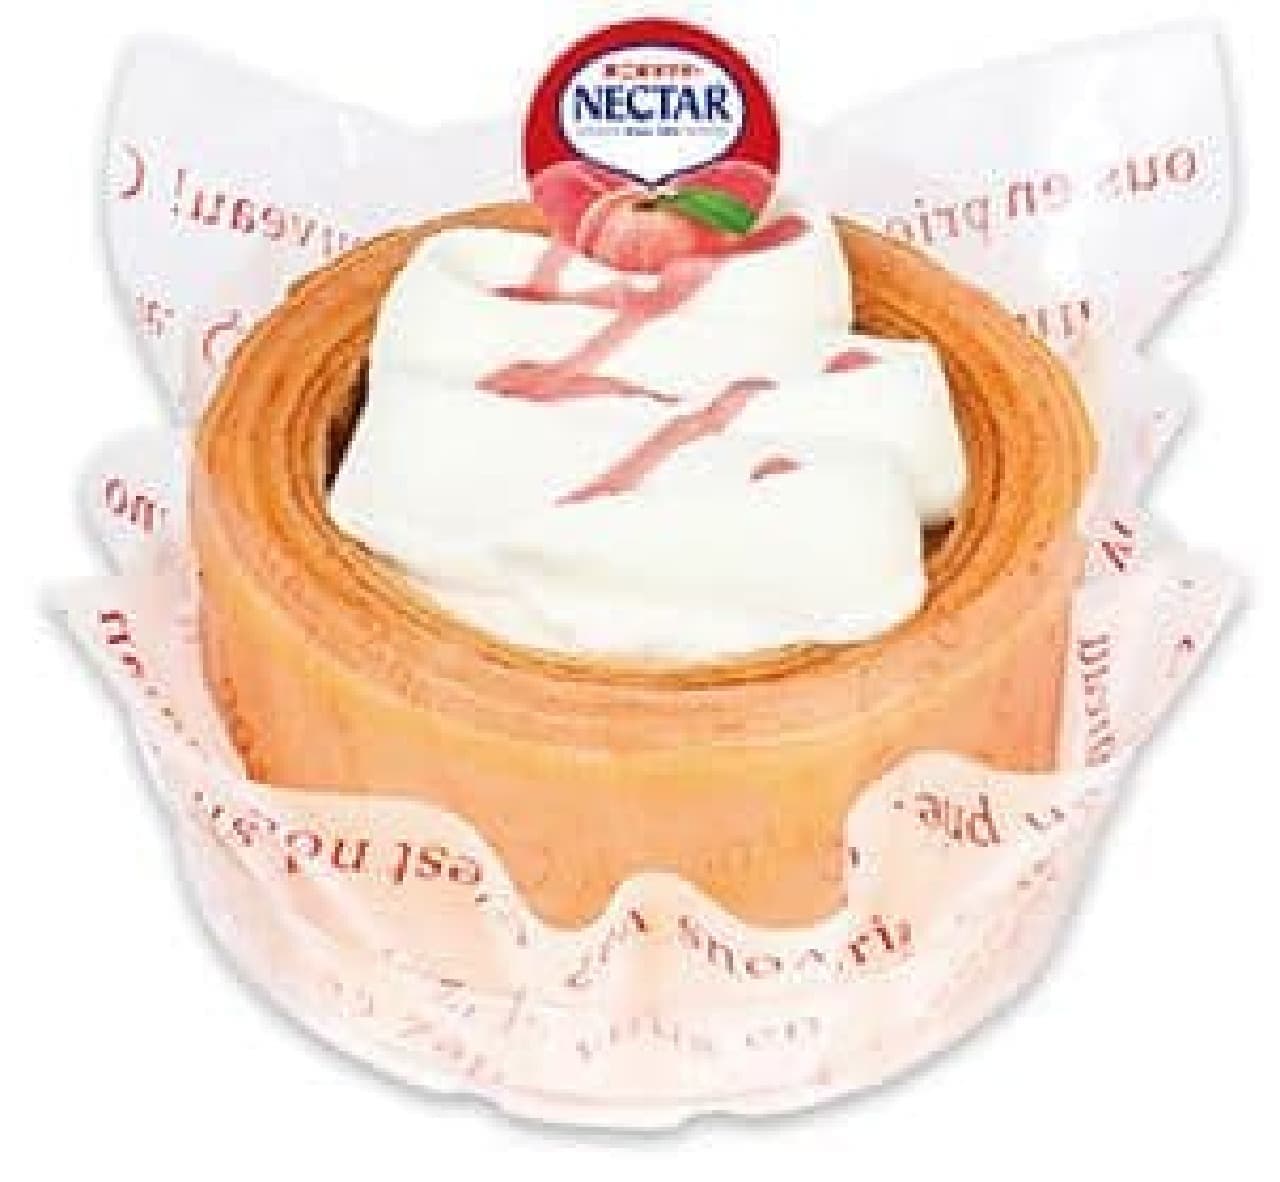 Fujiya pastry shop "Plenty of cream stump cake (nectar peach)"